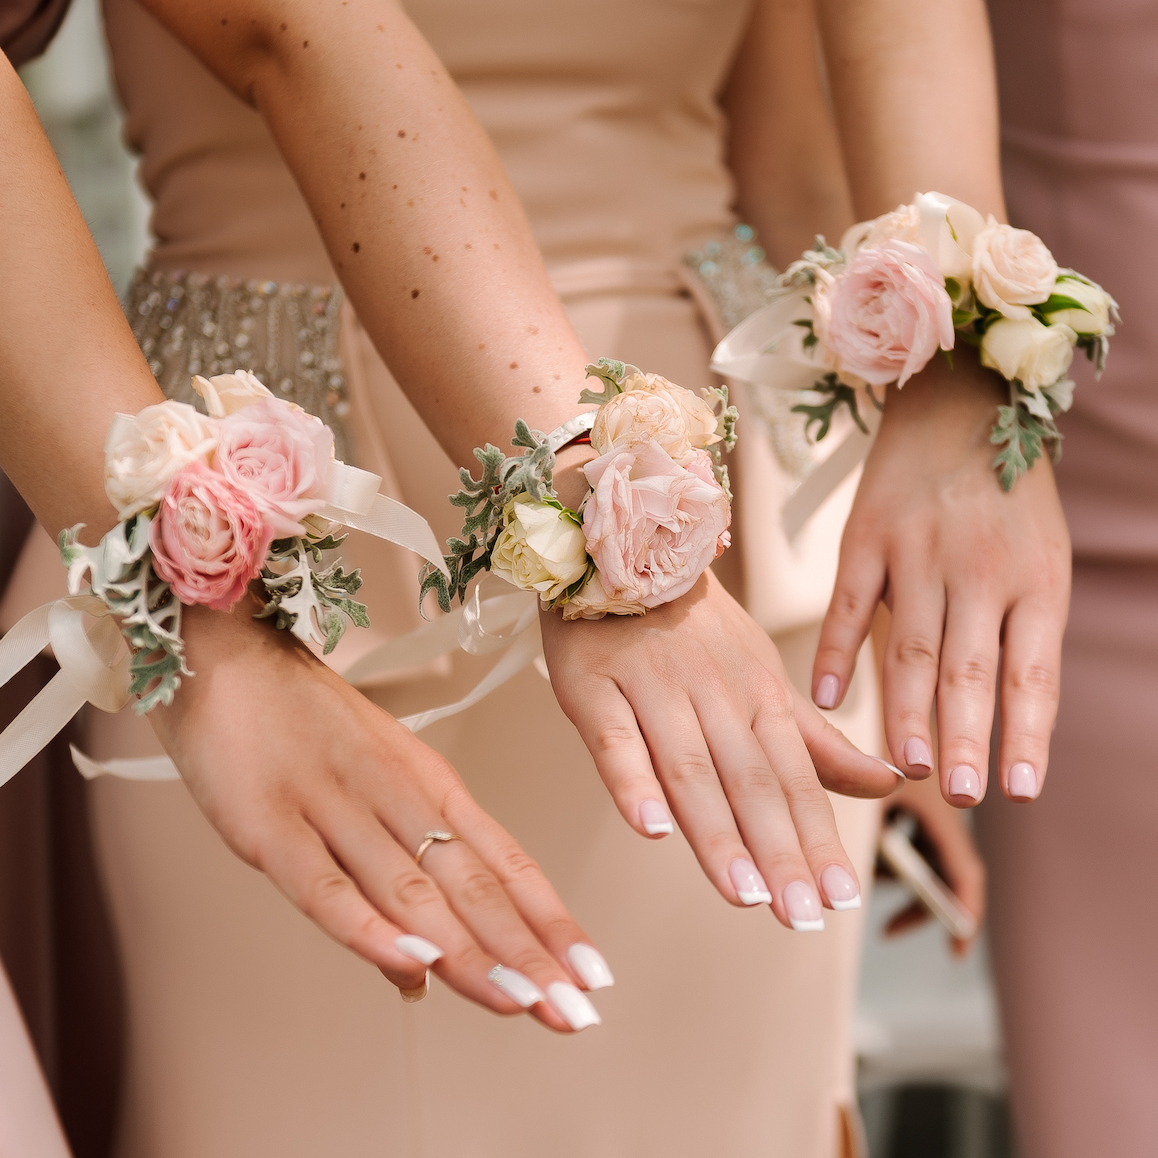 Wrist Corsage Elegant Comfortable Touch AntiWear Bride Bridesmaid Wrist Corsage  Flower Bracelet for Wedding5  Catchcomau